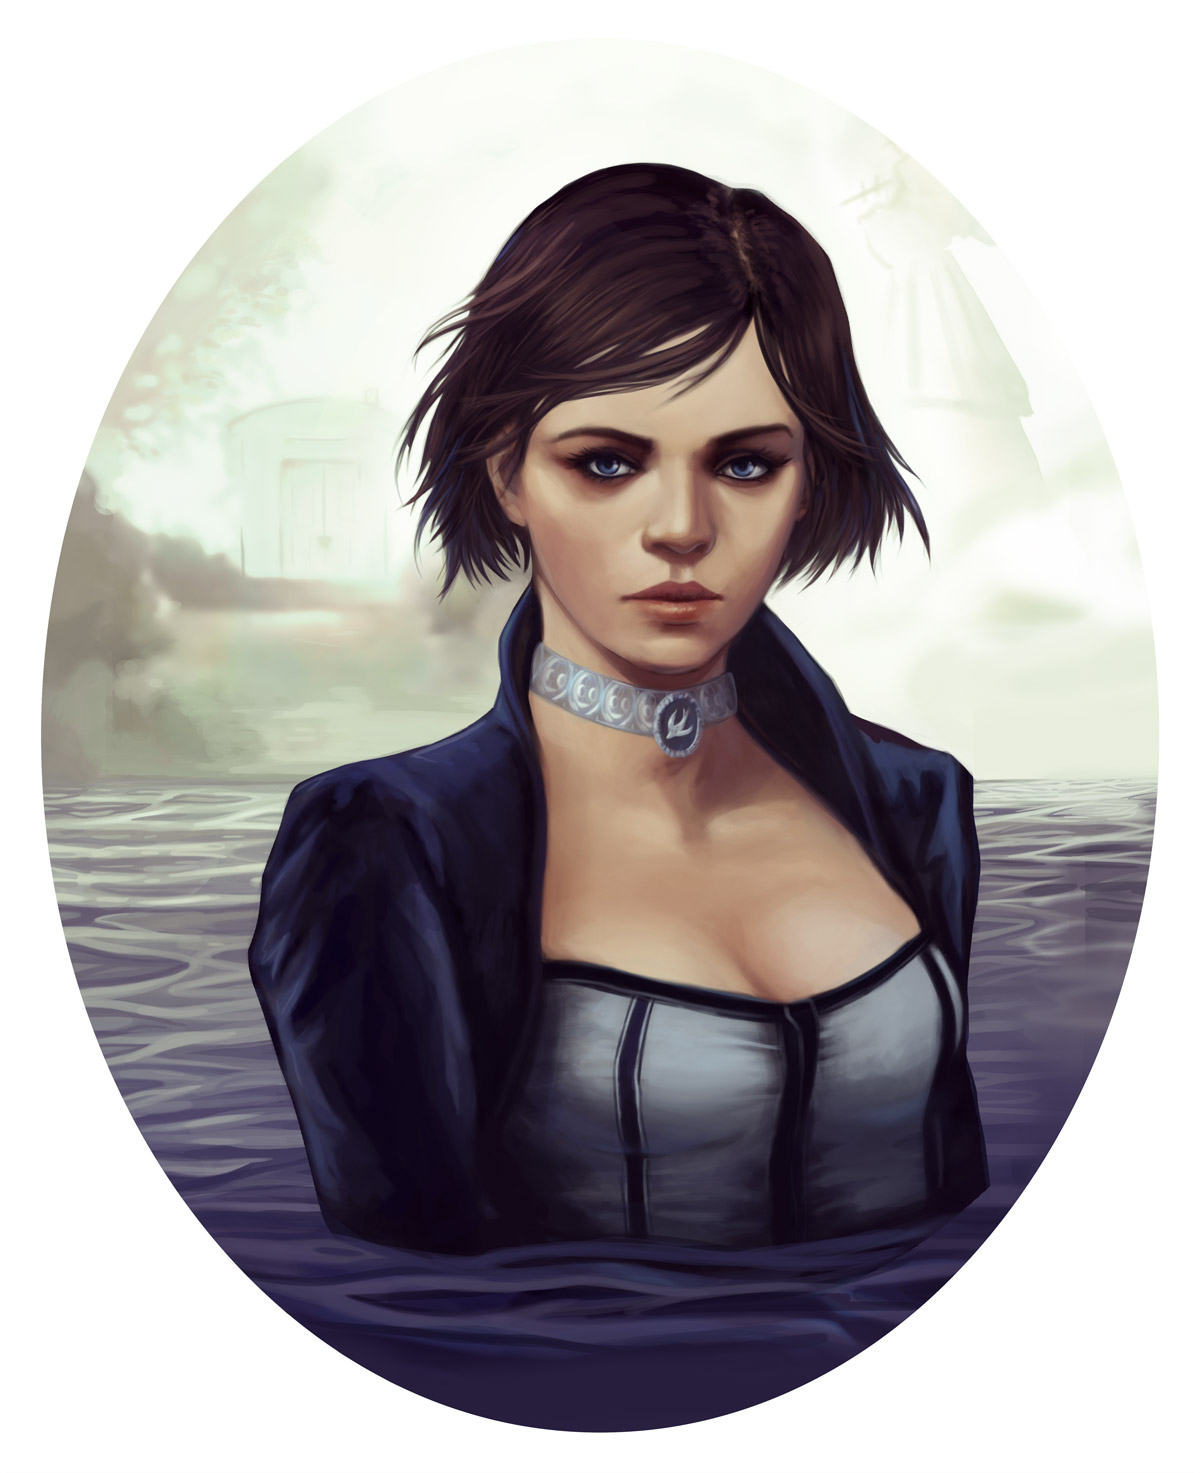 Digital portrait of Elizabeth Comstock from the video game Bioshock Infinte